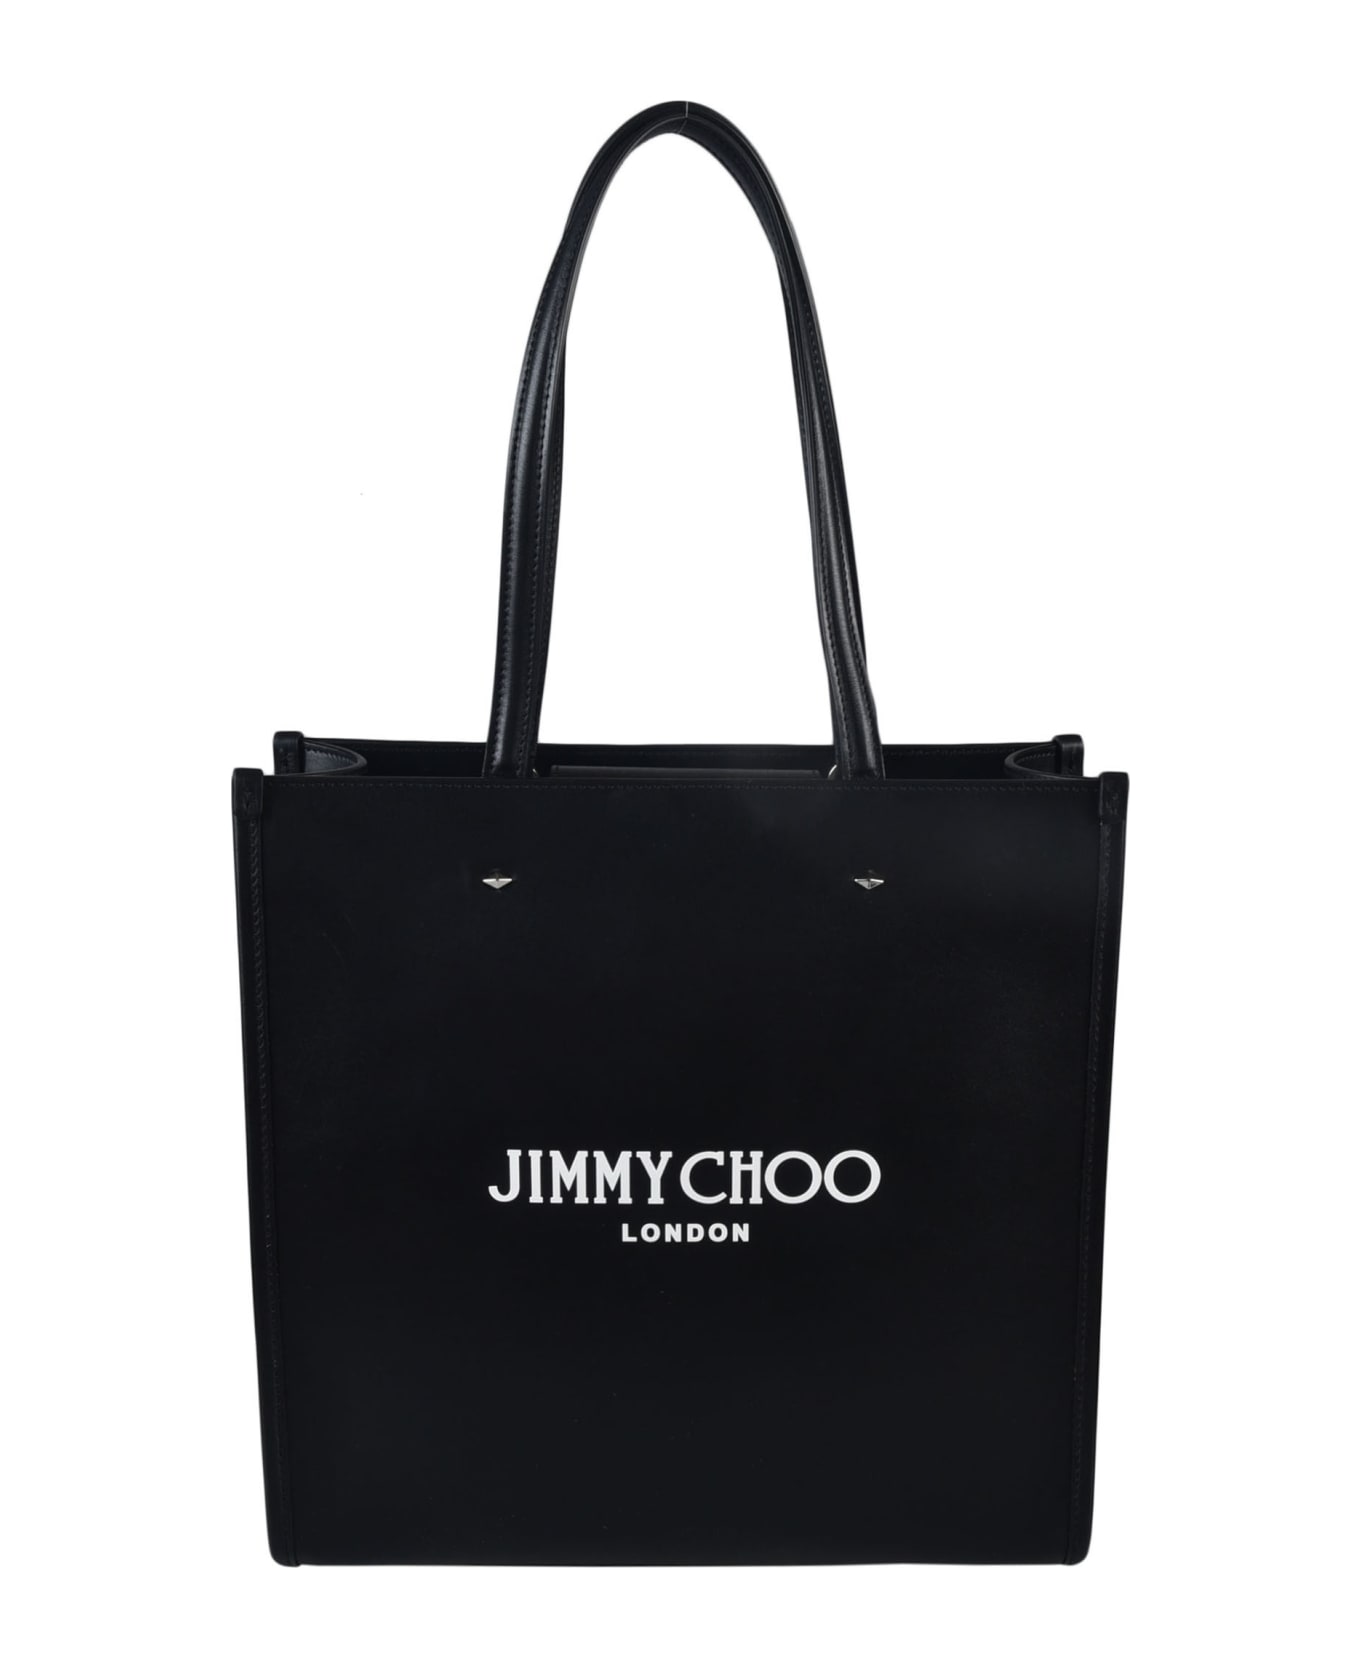 Jimmy Choo Logo Printed Tote - Black/White/Silver